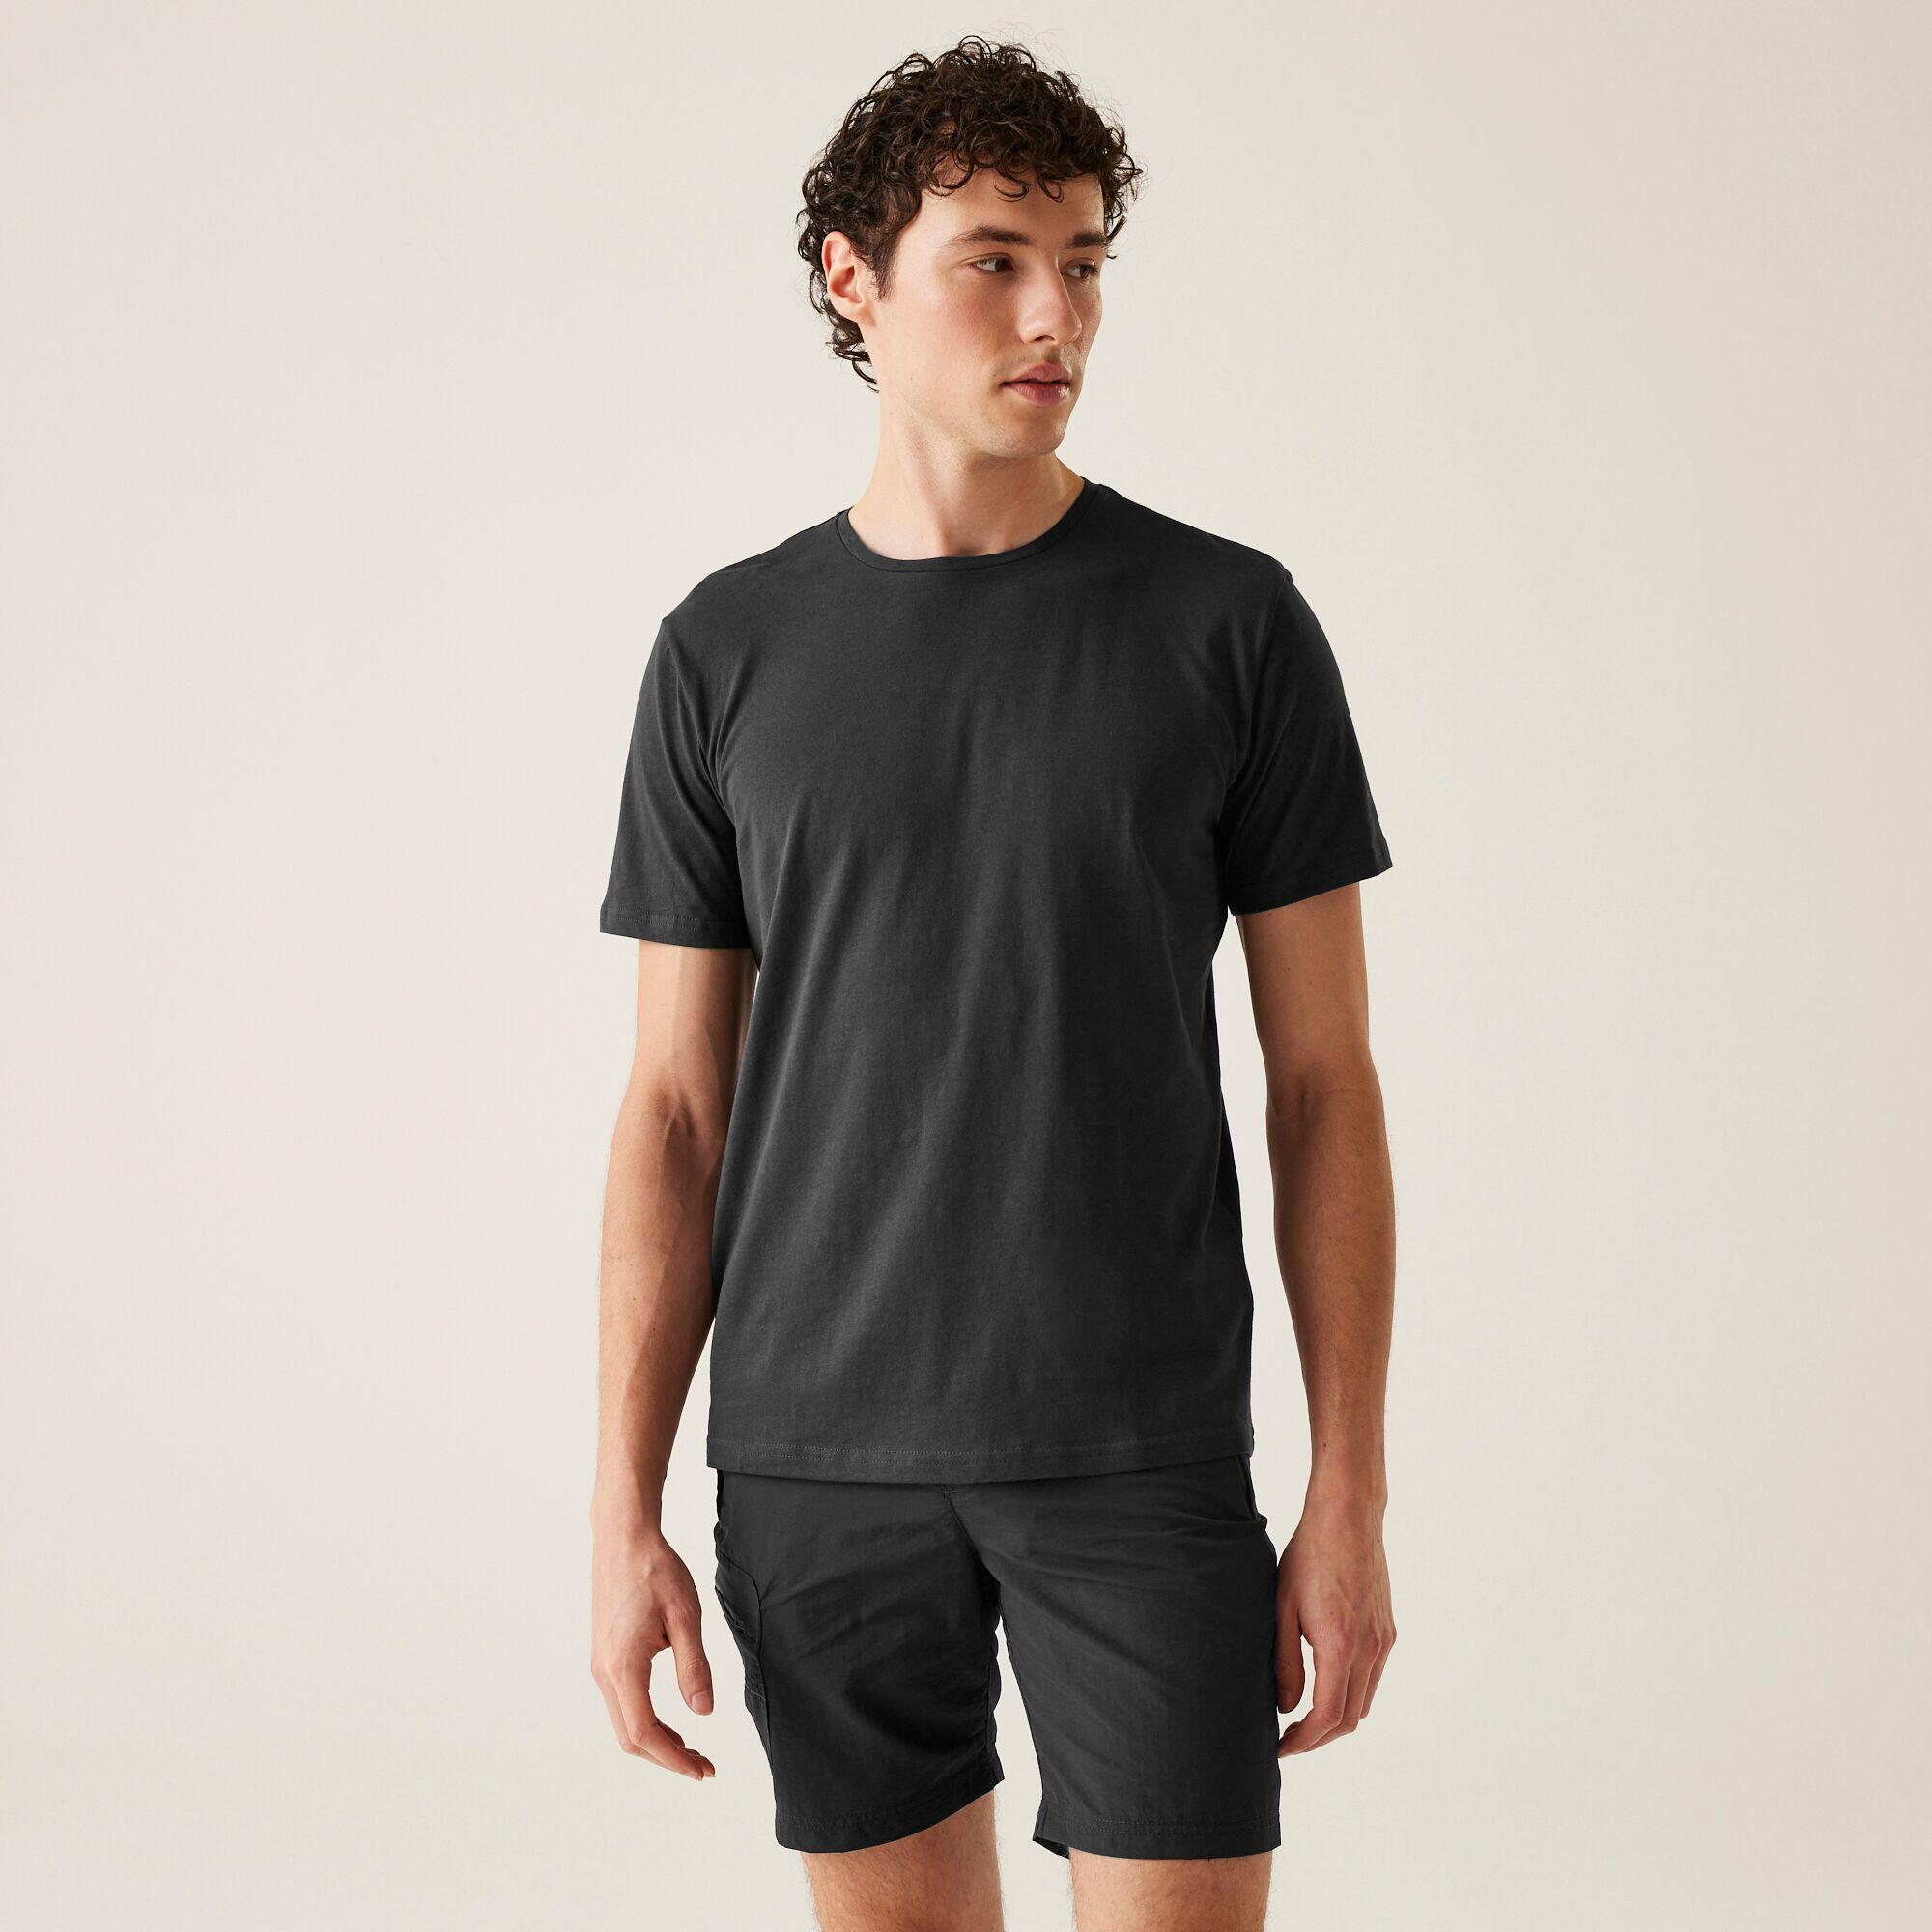 REGATTA Tait Men's Fitness T-Shirt - Dark Grey